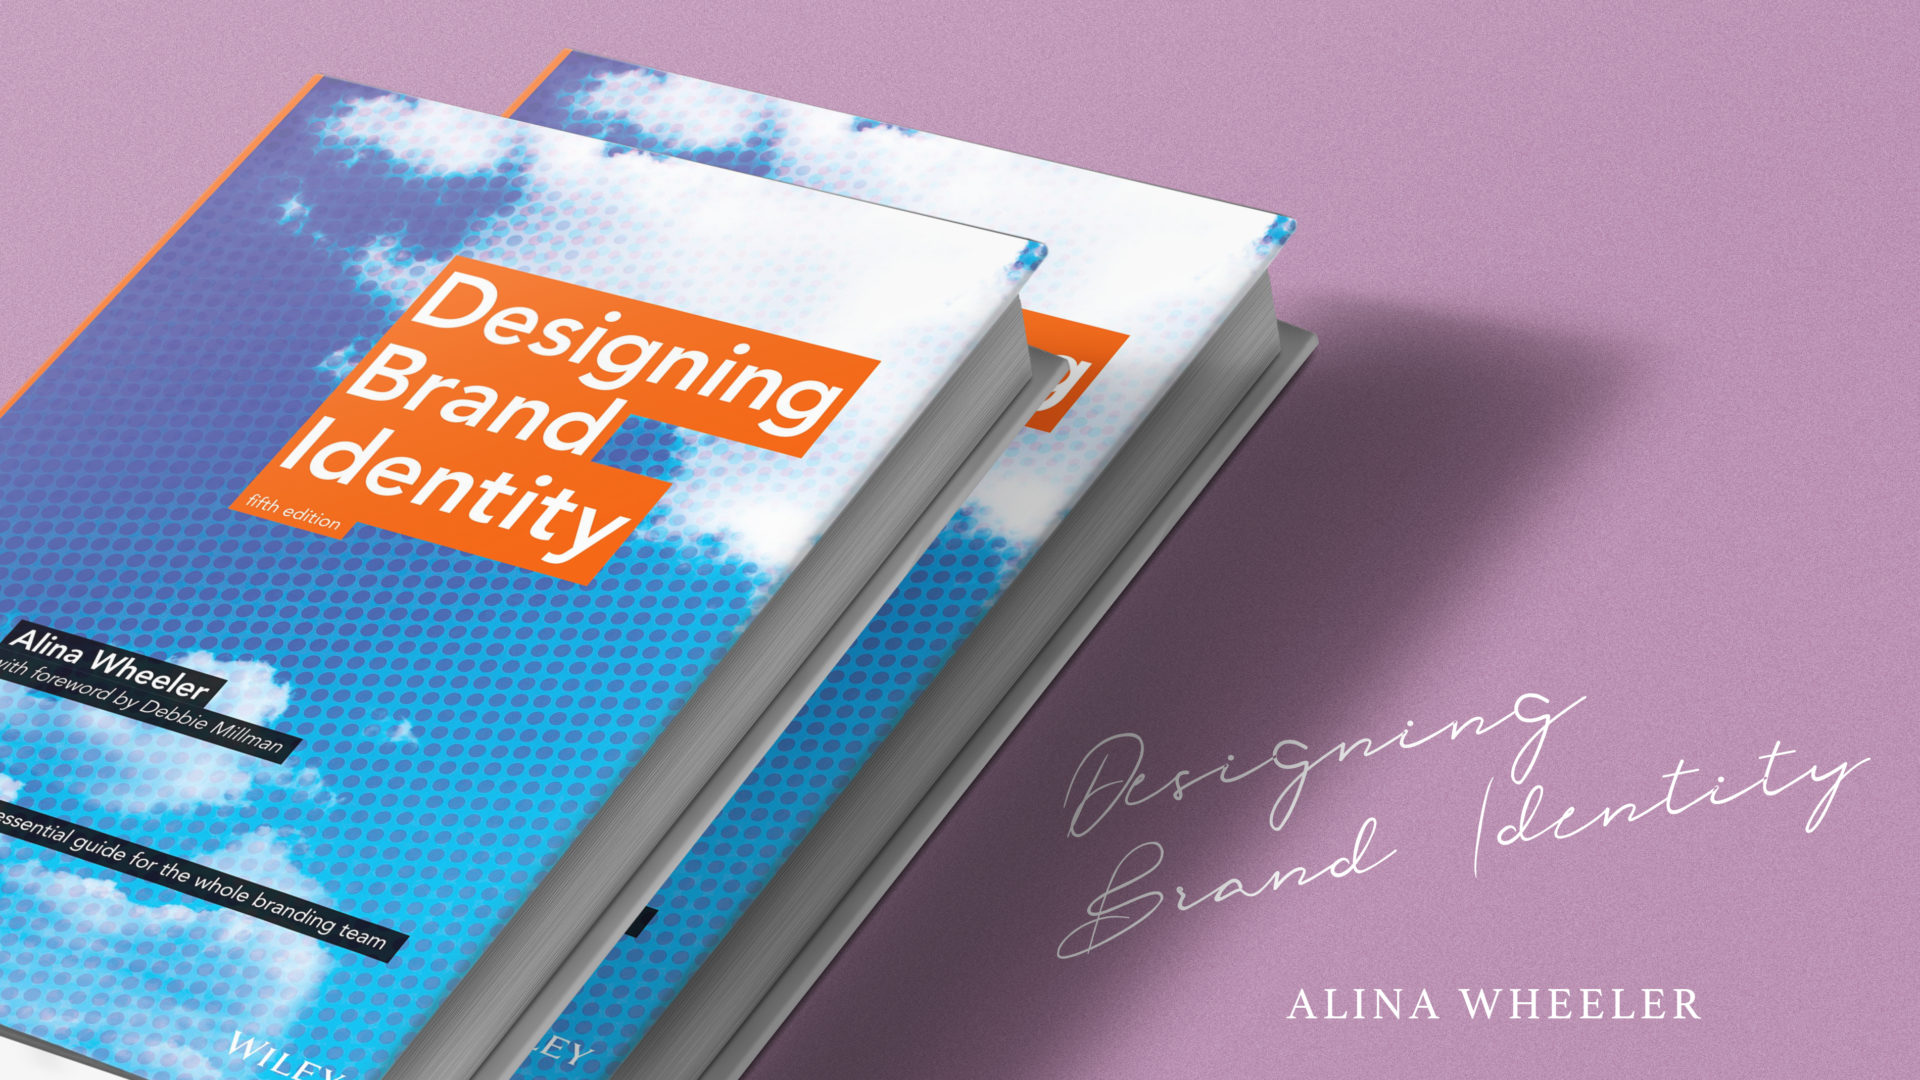 Designing Brand Identity book by Alina Wheeler